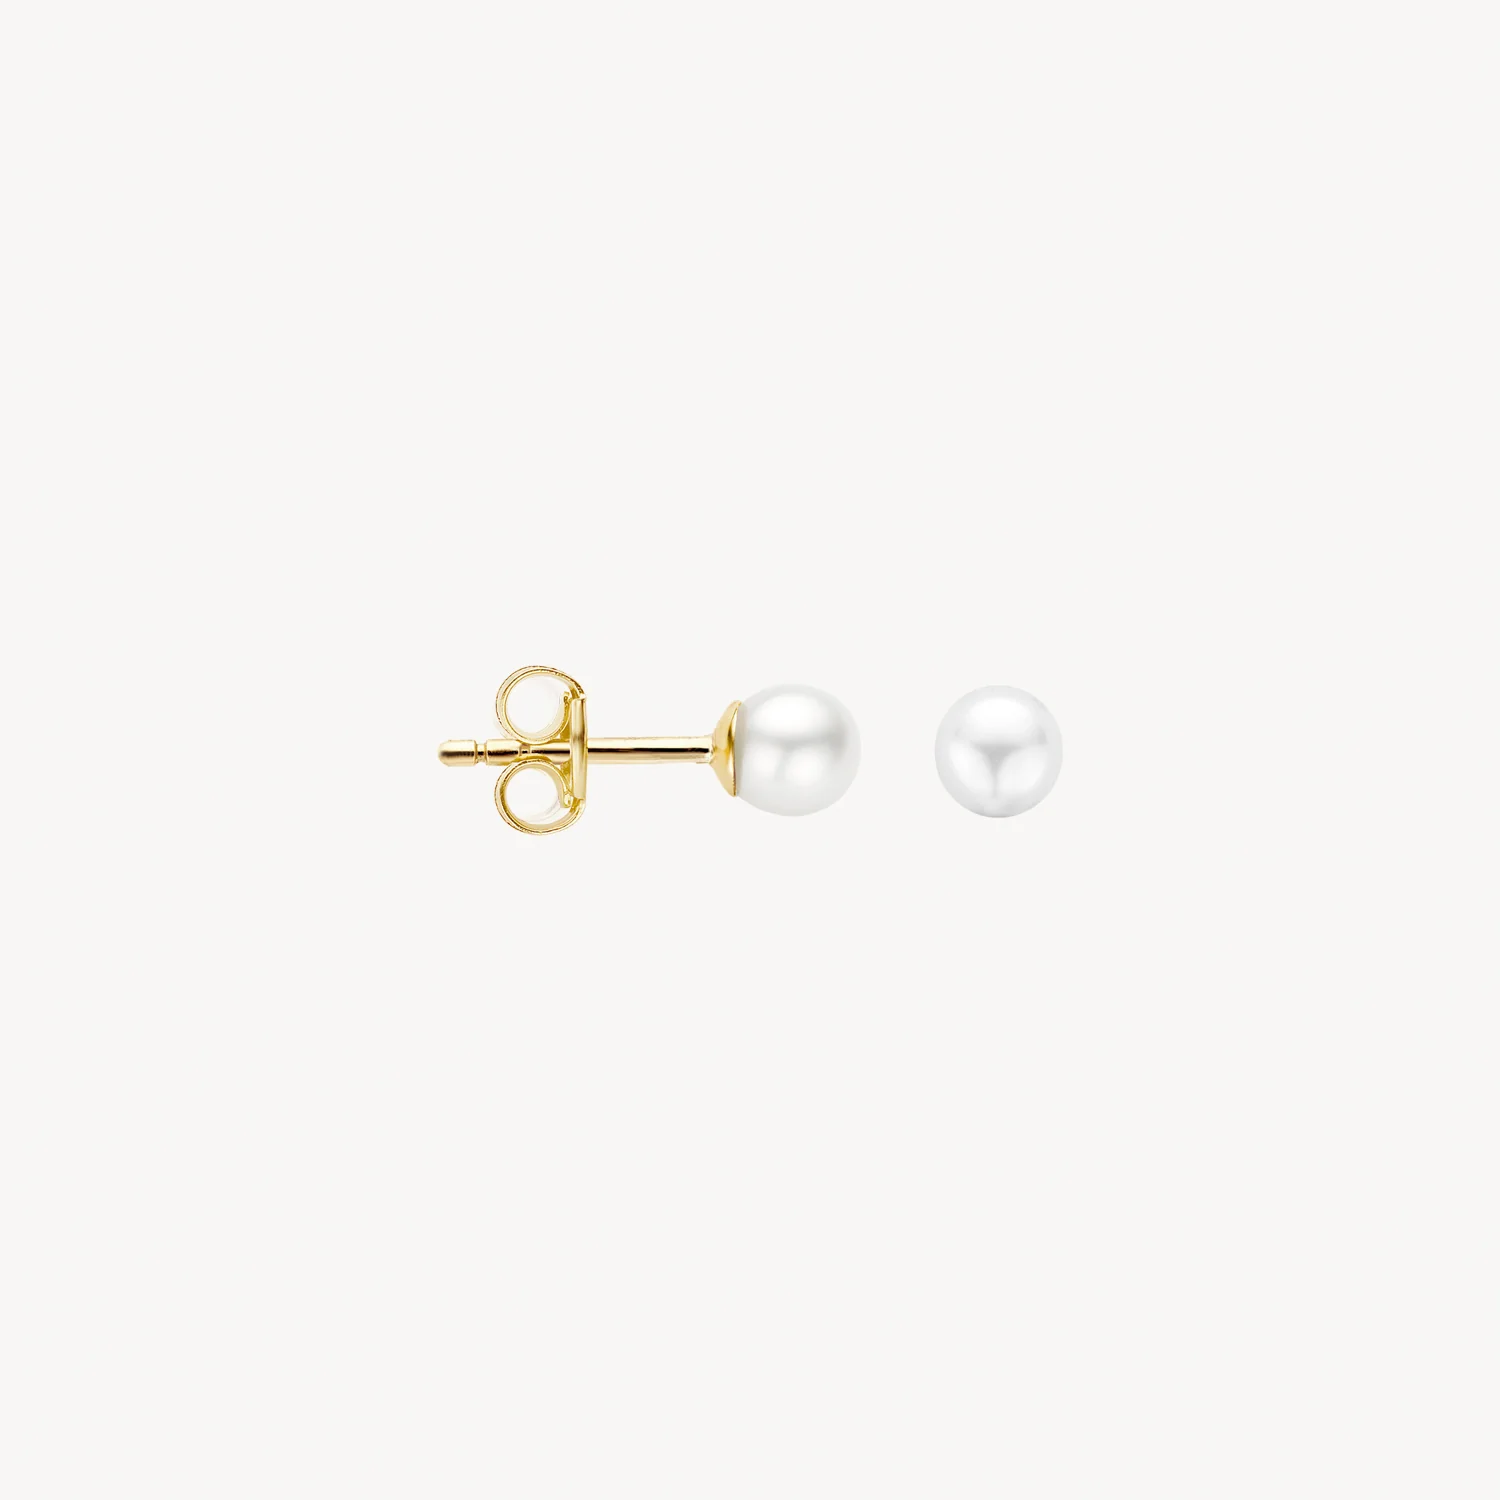 Blush Gold & Pearl Stud Earrings - Small